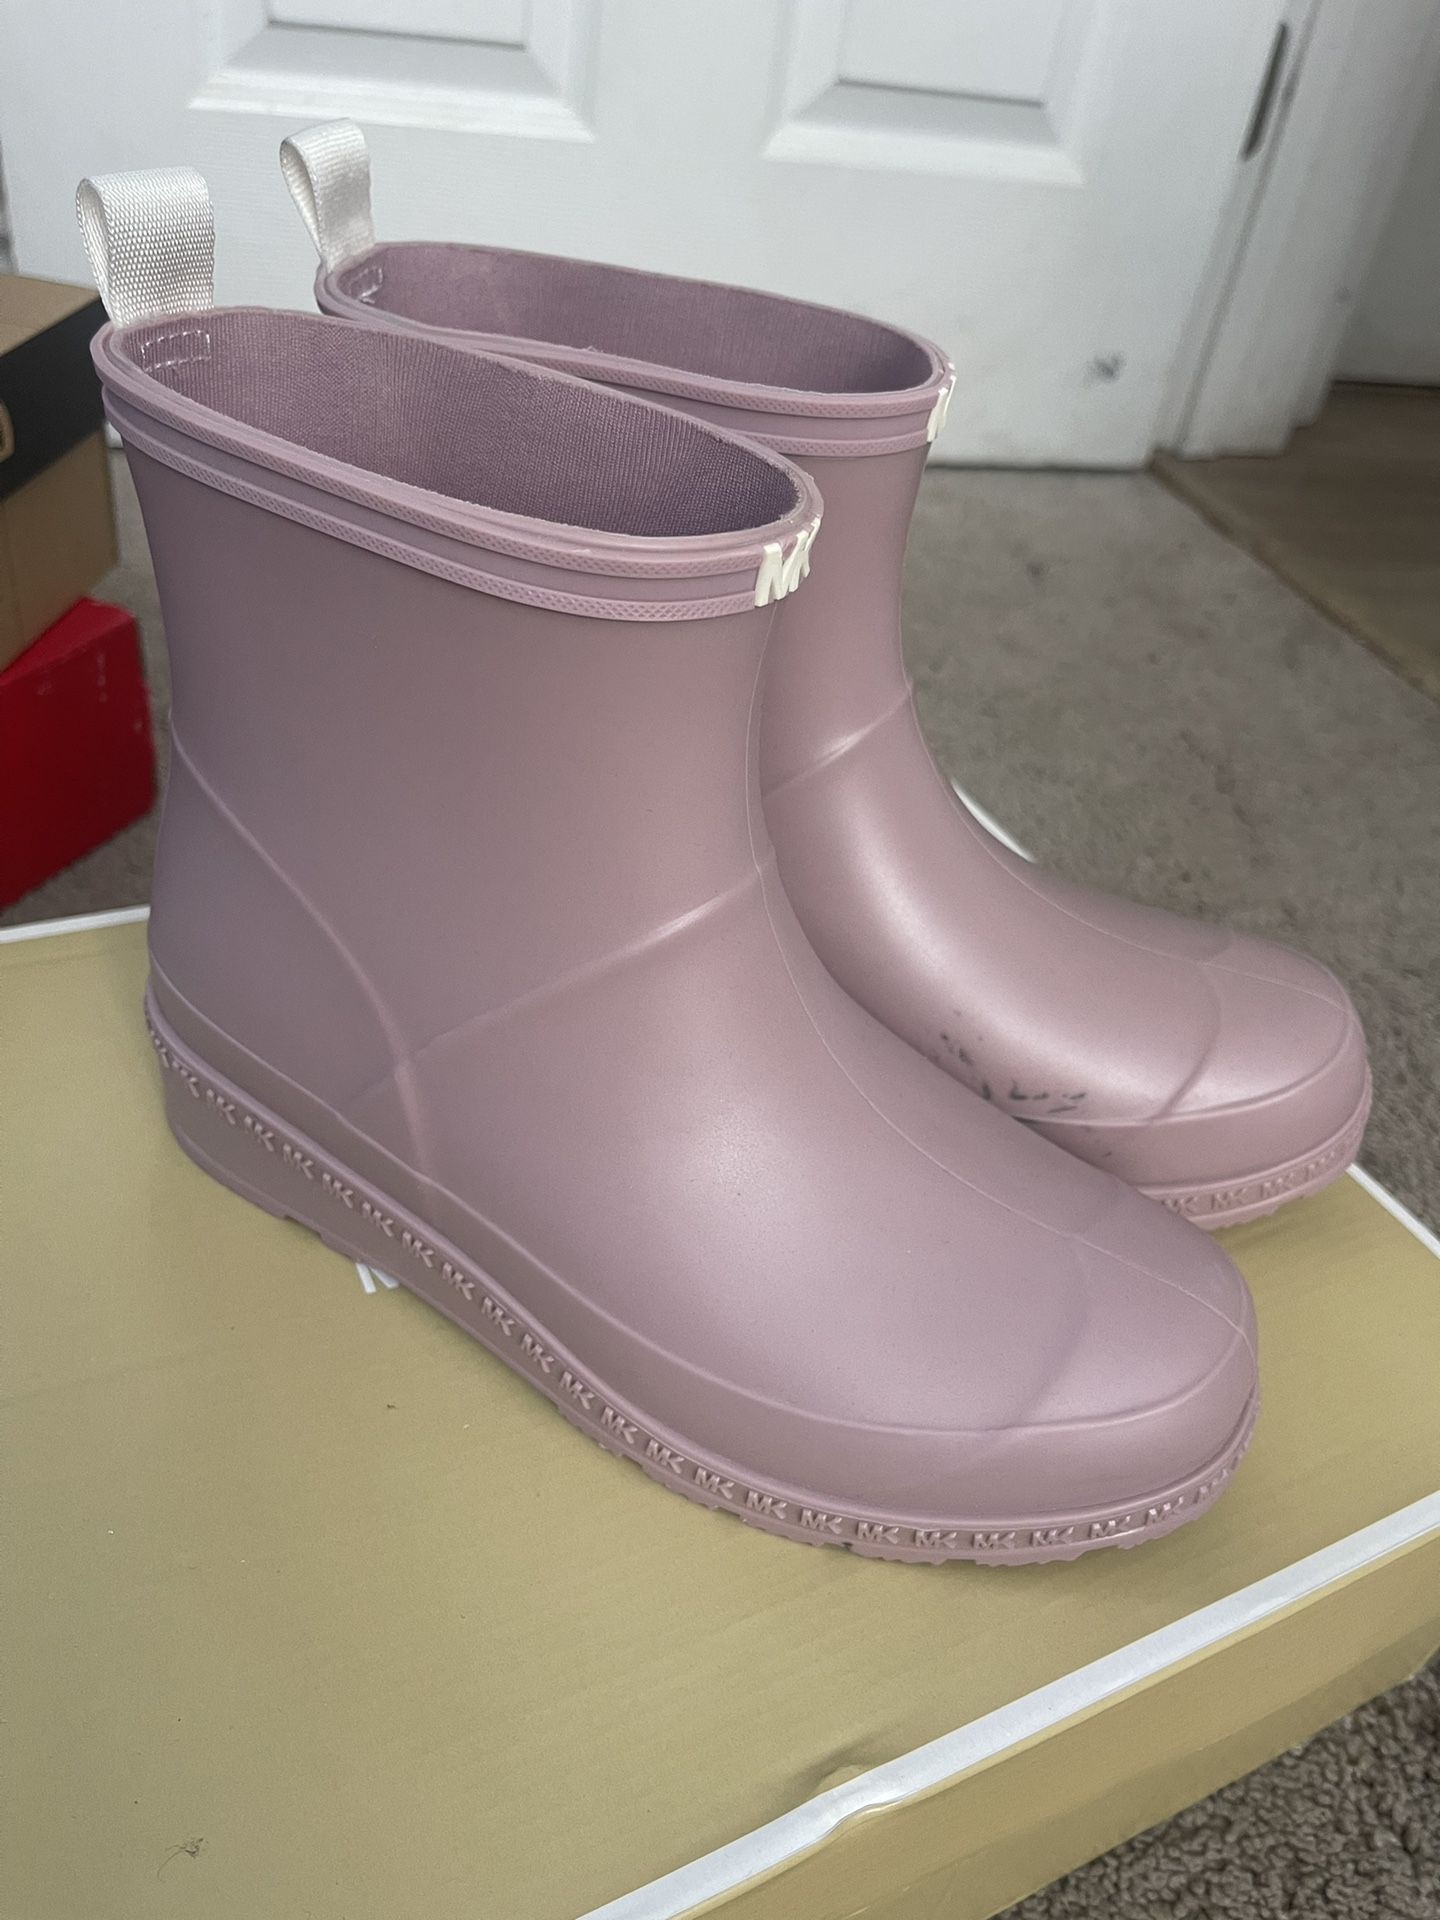 MK Rain Boots for Sale in Whittier, CA - OfferUp